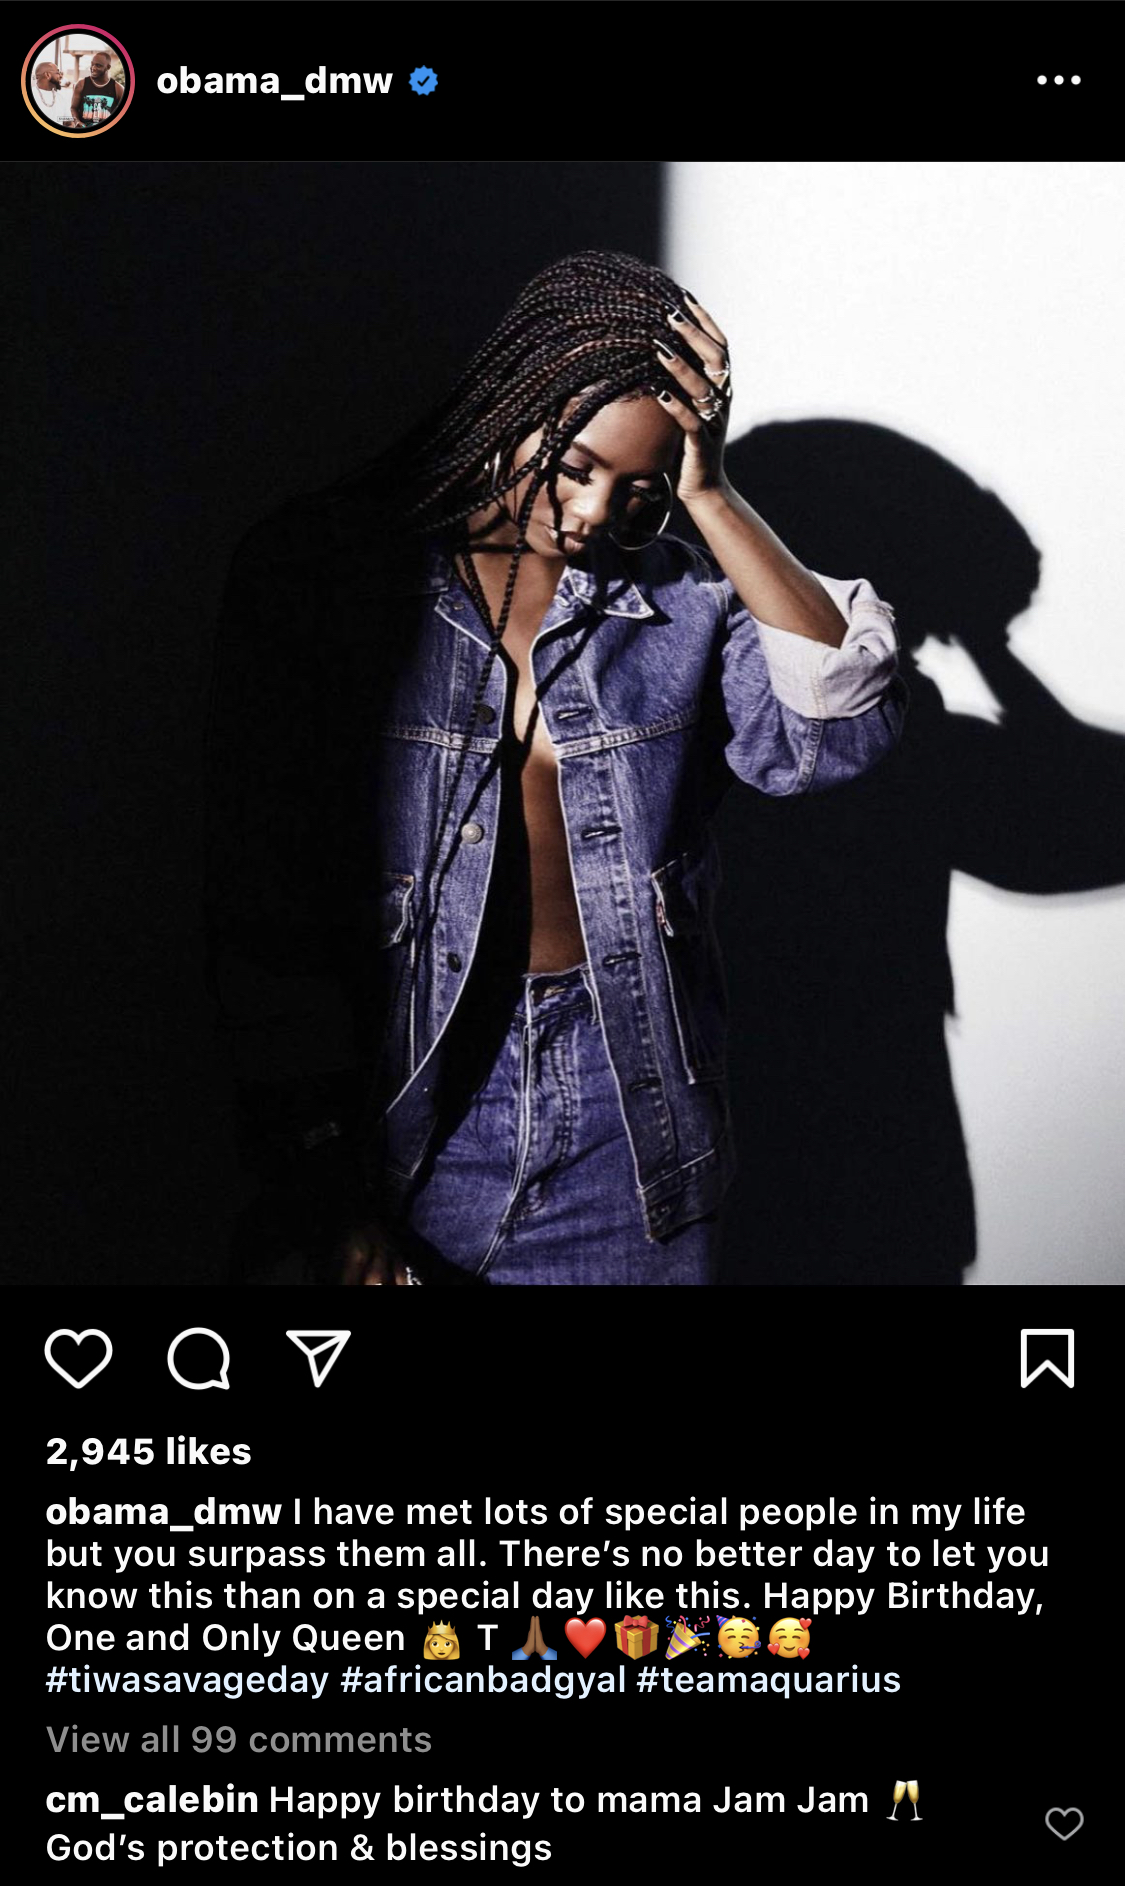 His Instagram post